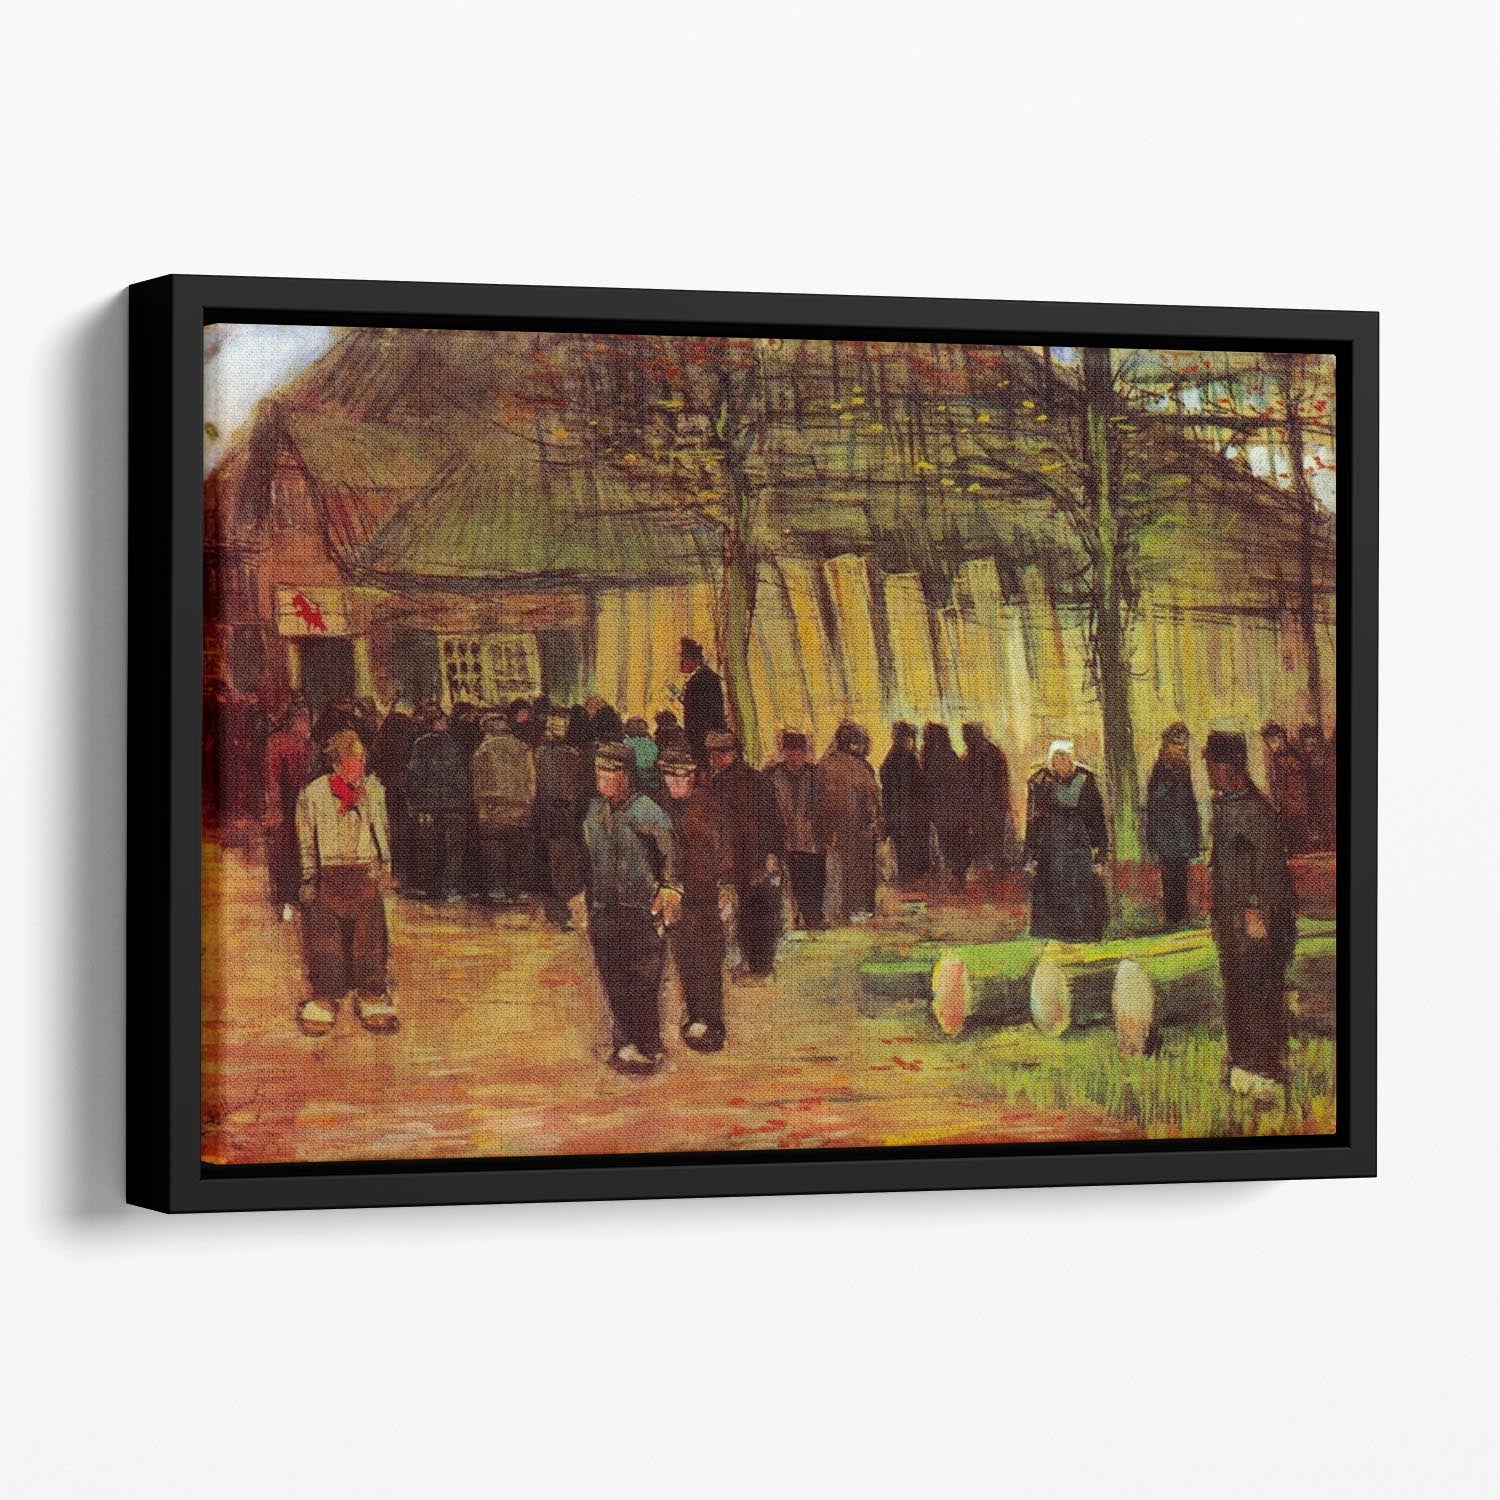 Lumber Sale by Van Gogh Floating Framed Canvas